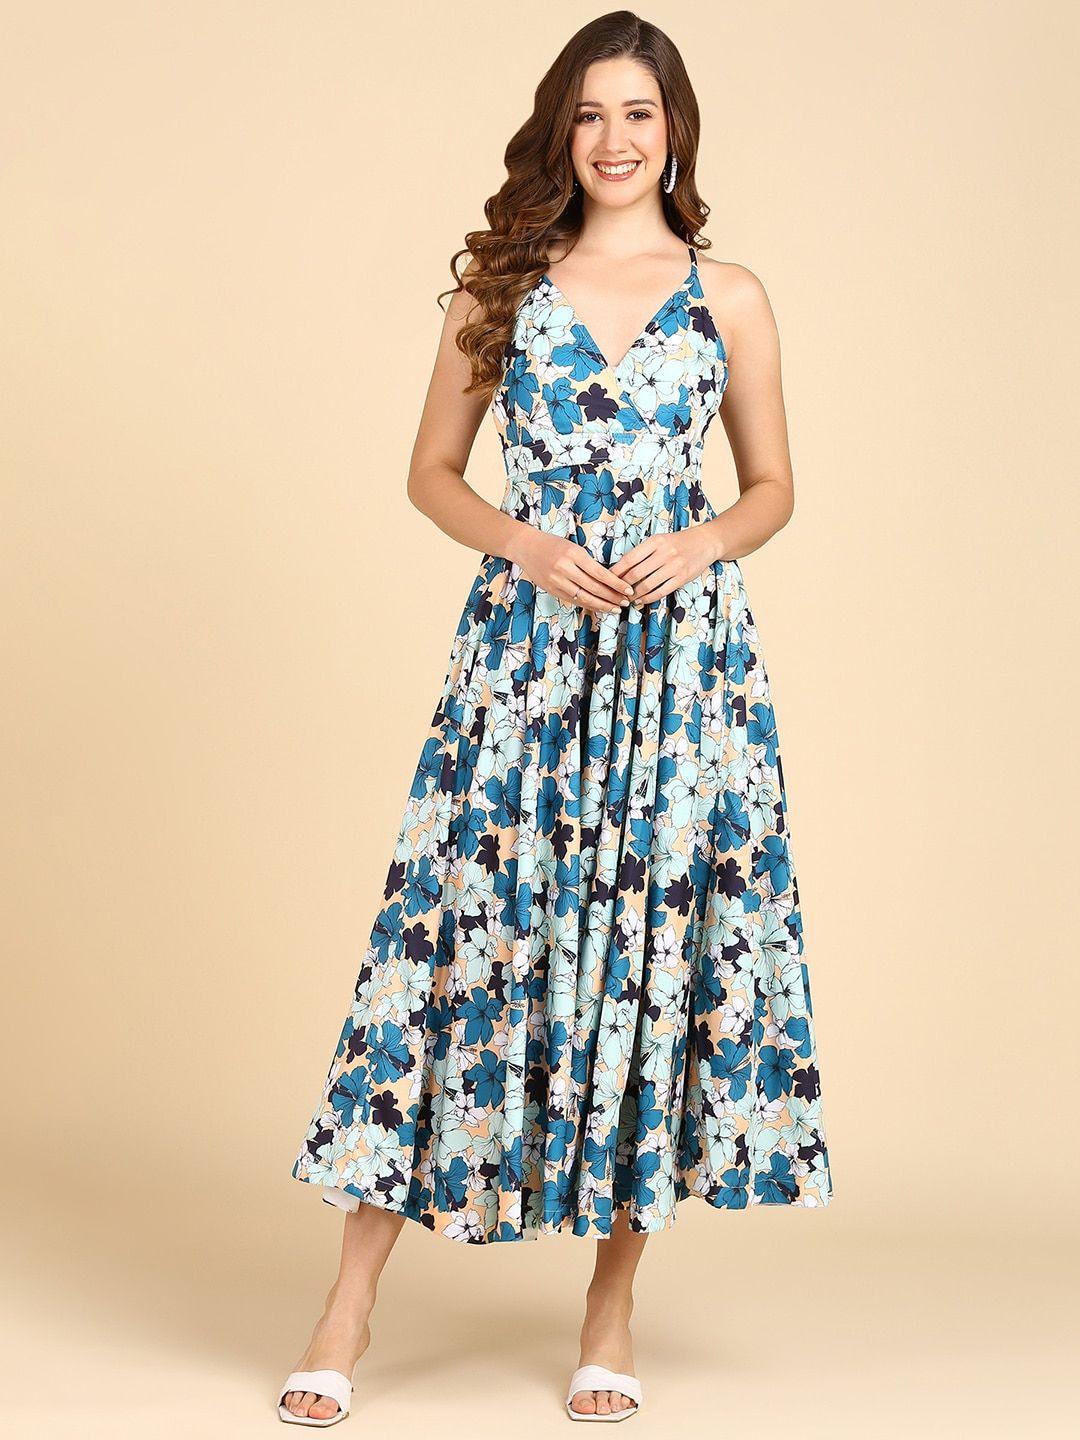 znx clothing floral printed shoulder straps fit & flare midi dress